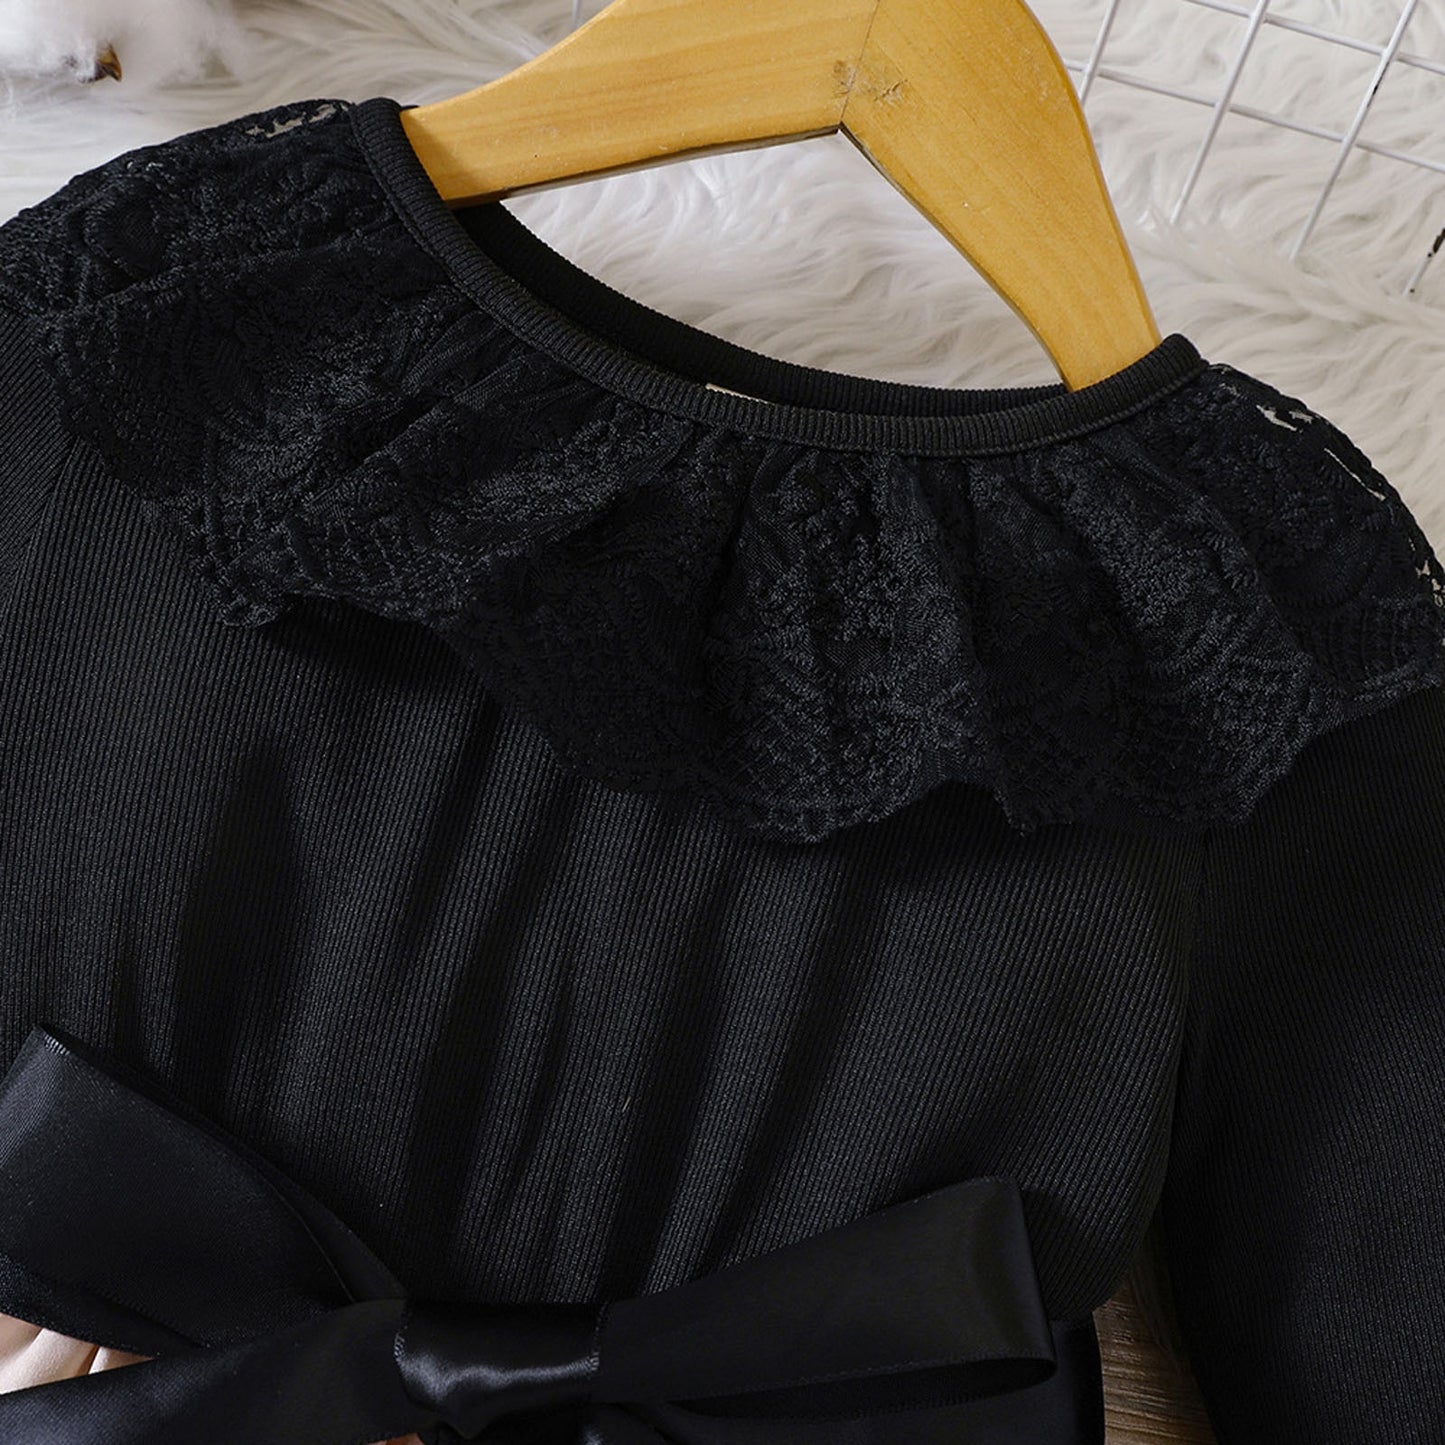 Toddler Girls Autumn Clothing Long Sleeve Black Lace Collar Polka Dots Dress - KGD8286